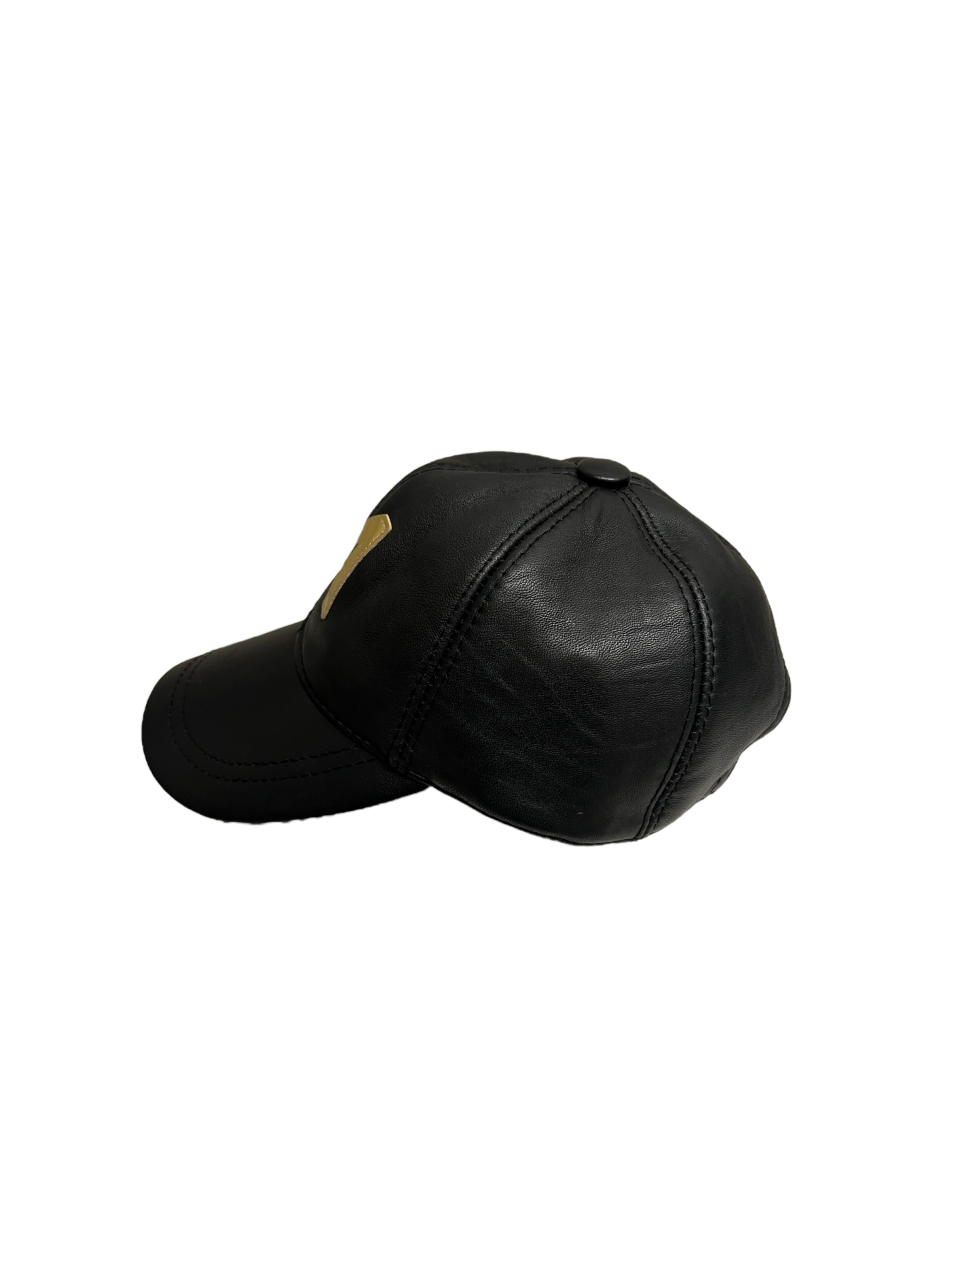 APOLINAR Black hat gold logo